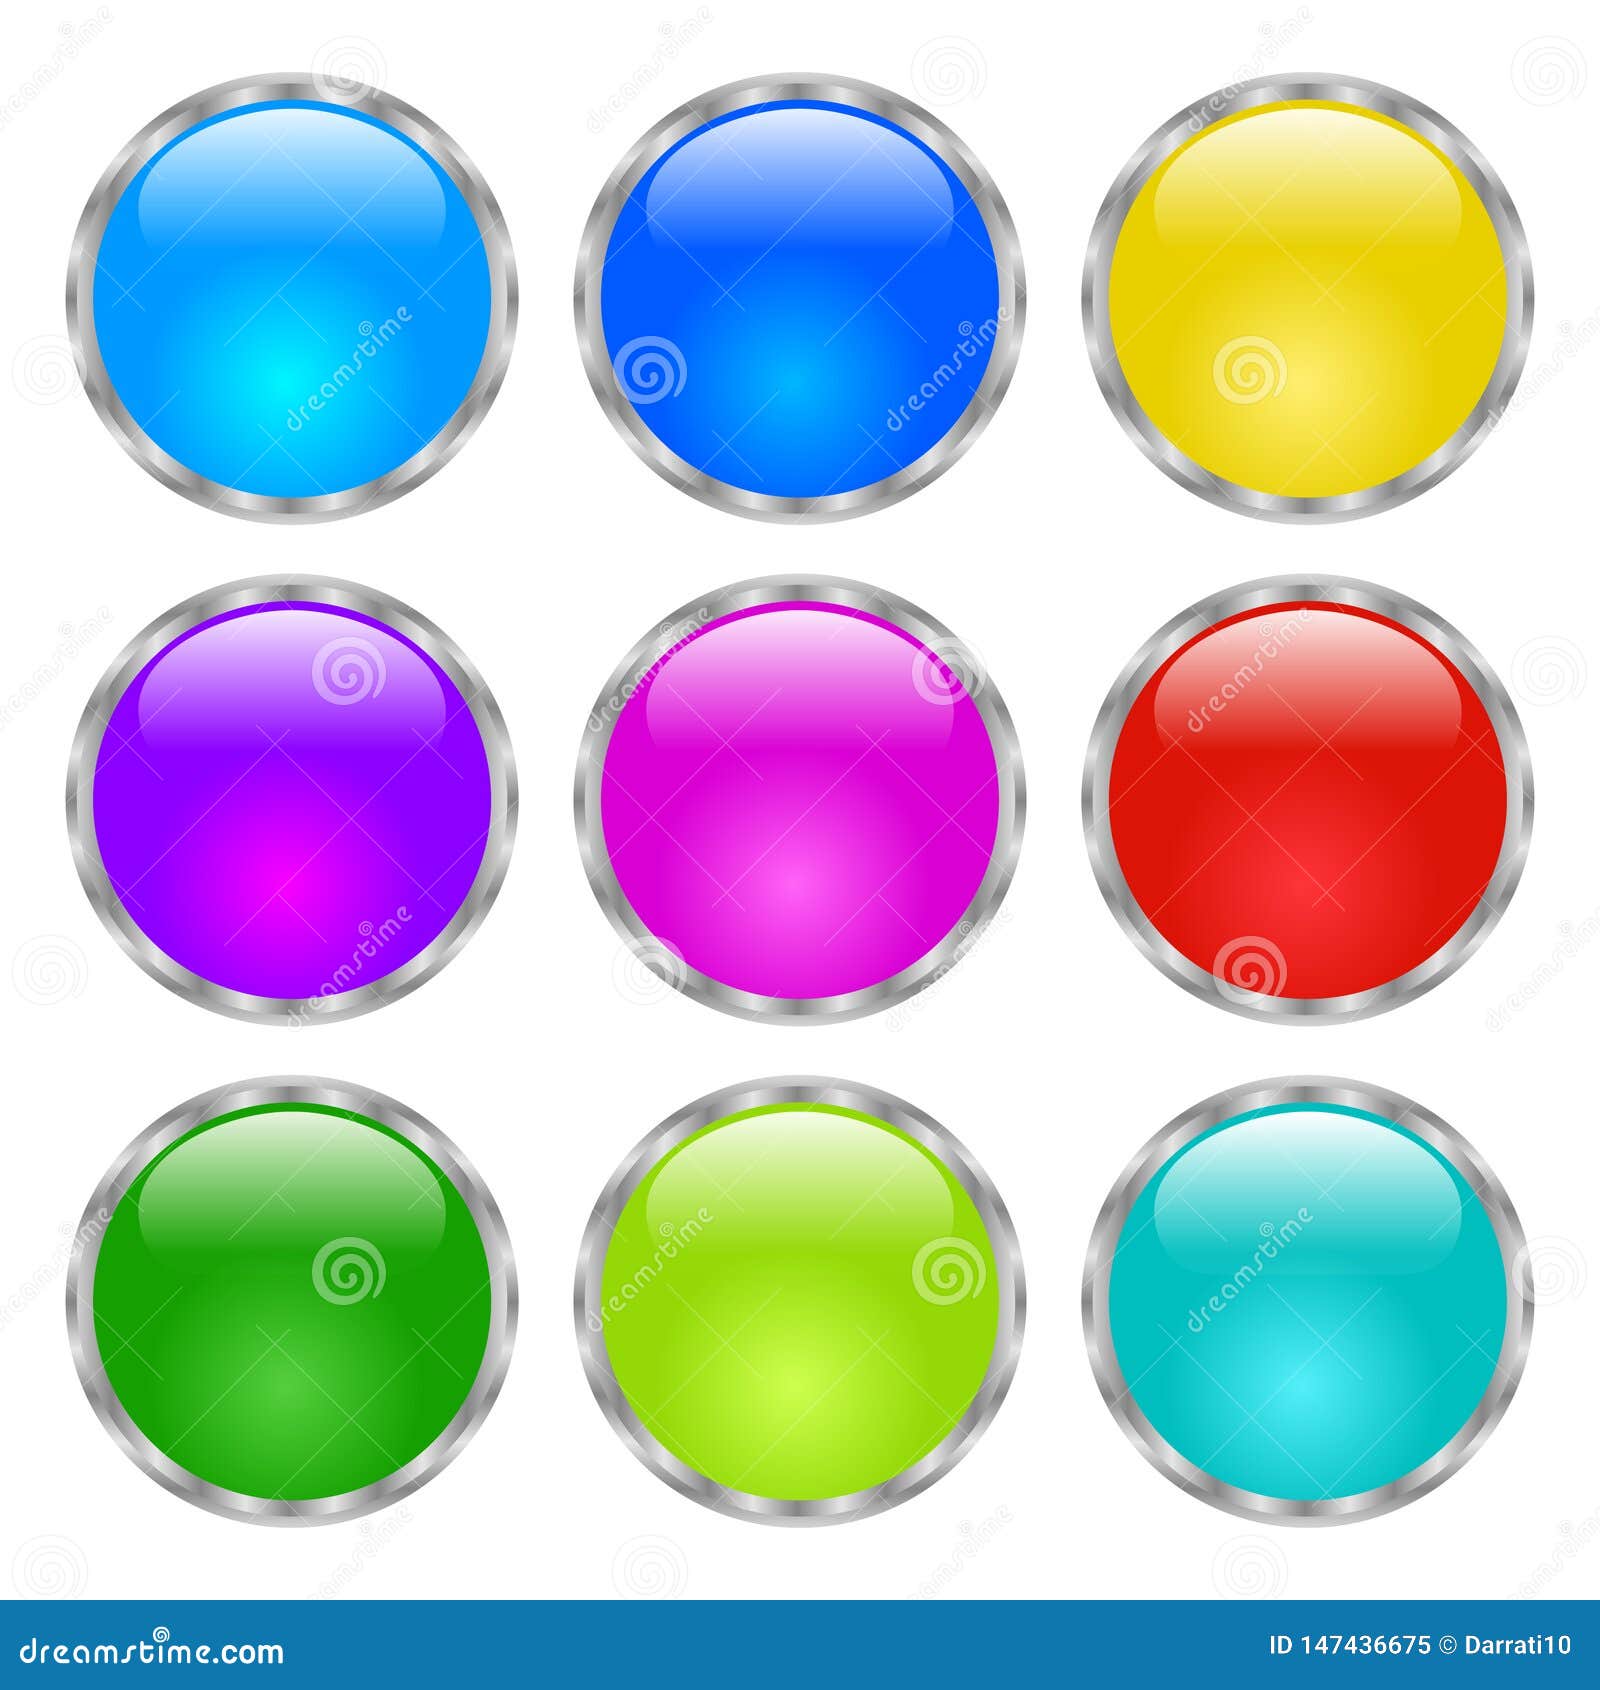 round buttons. shiny web icon with metallic frame.  on white background. raster version 